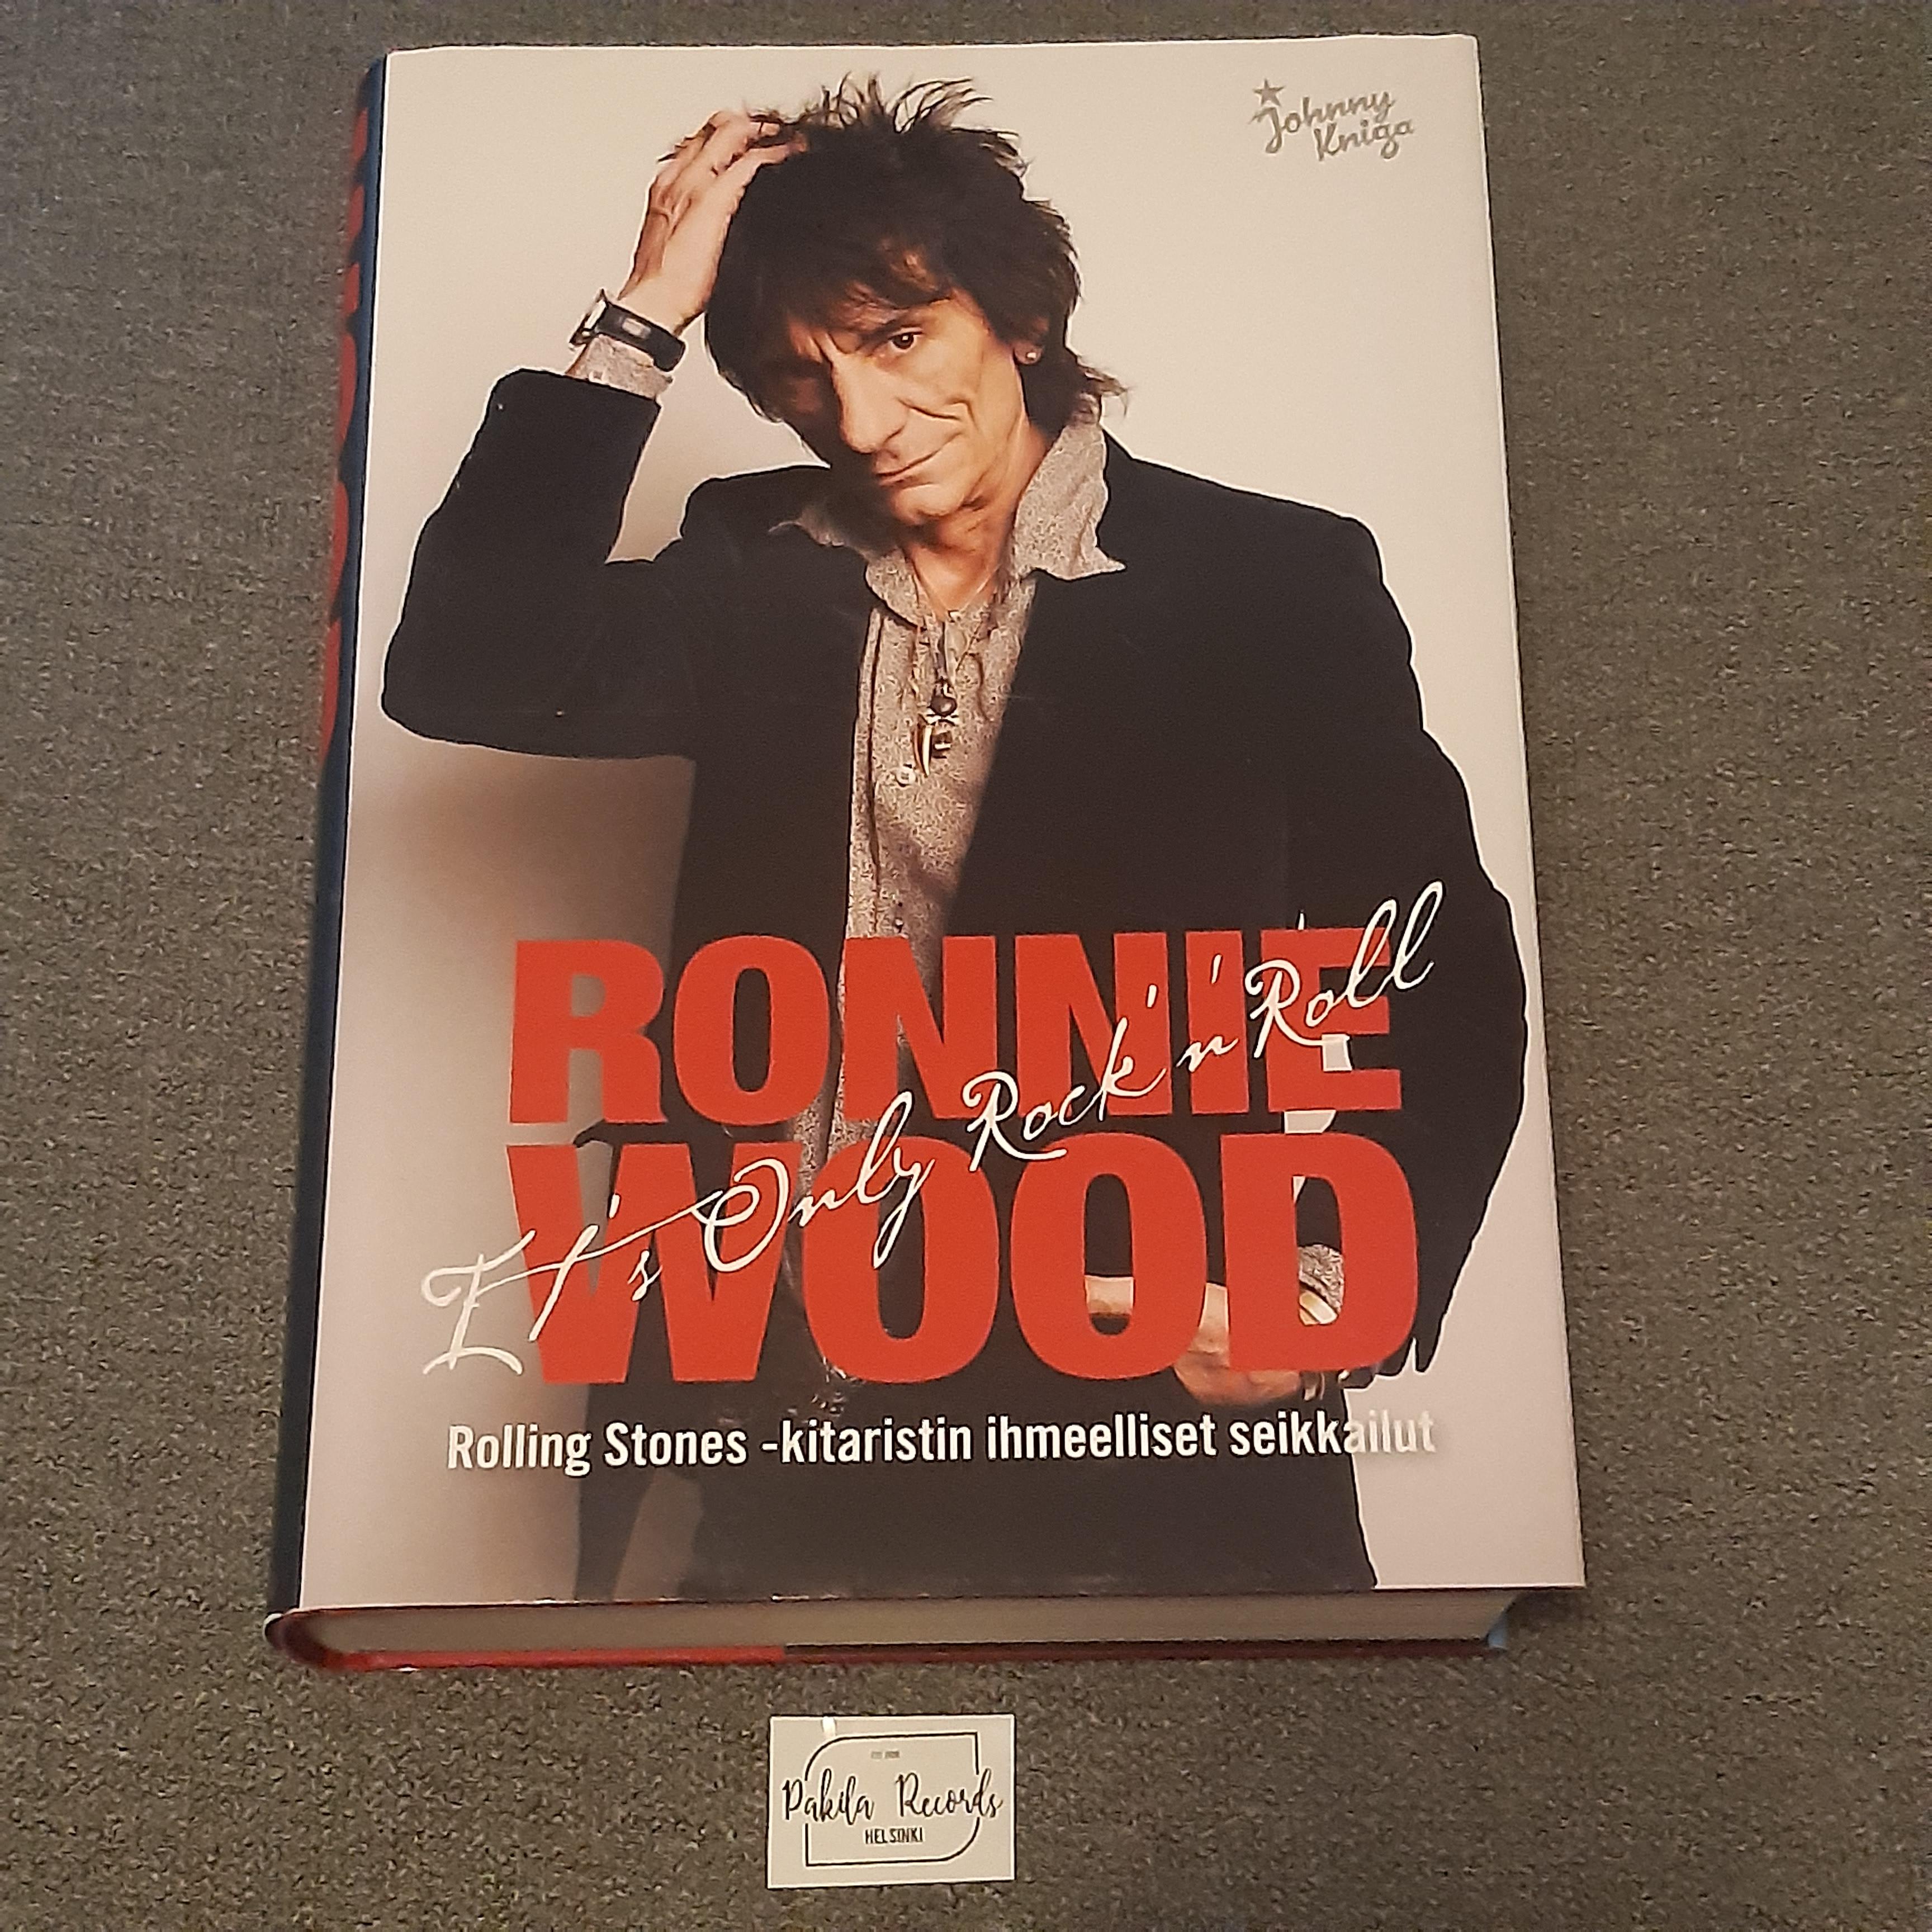 Ronnie Wood, It's Only Rock'n'Roll - Kirja (käytetty)